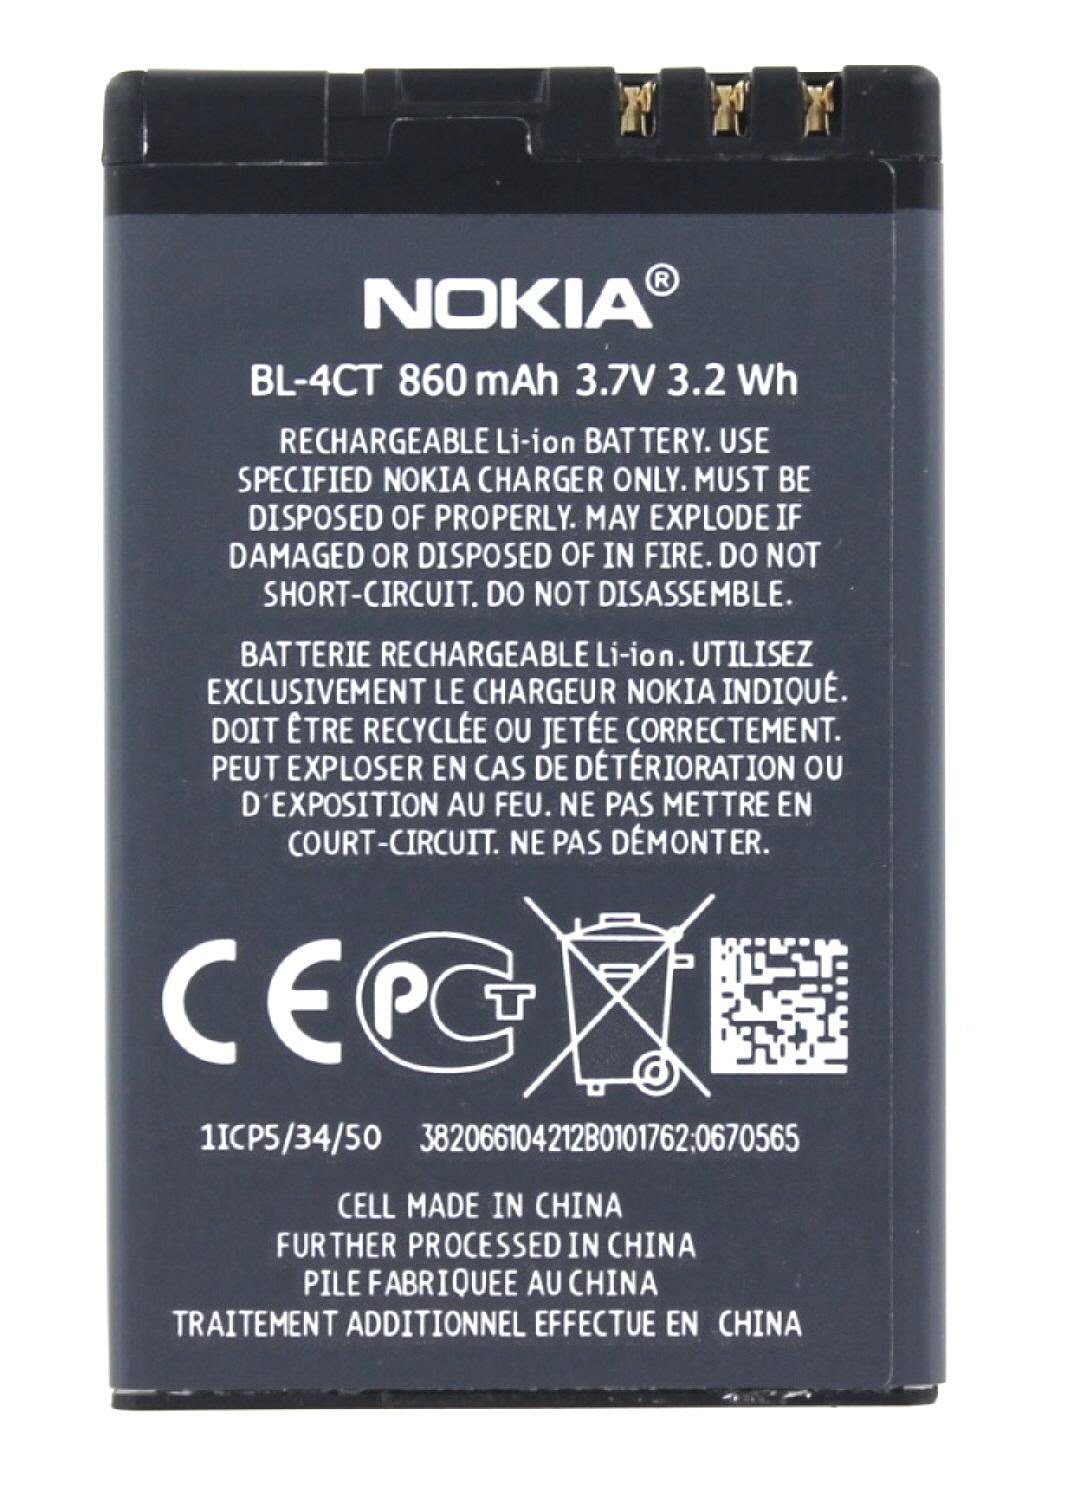 2720A-2 Akku Nokia 860 Nokia mAh Original Akkupacks Akku für